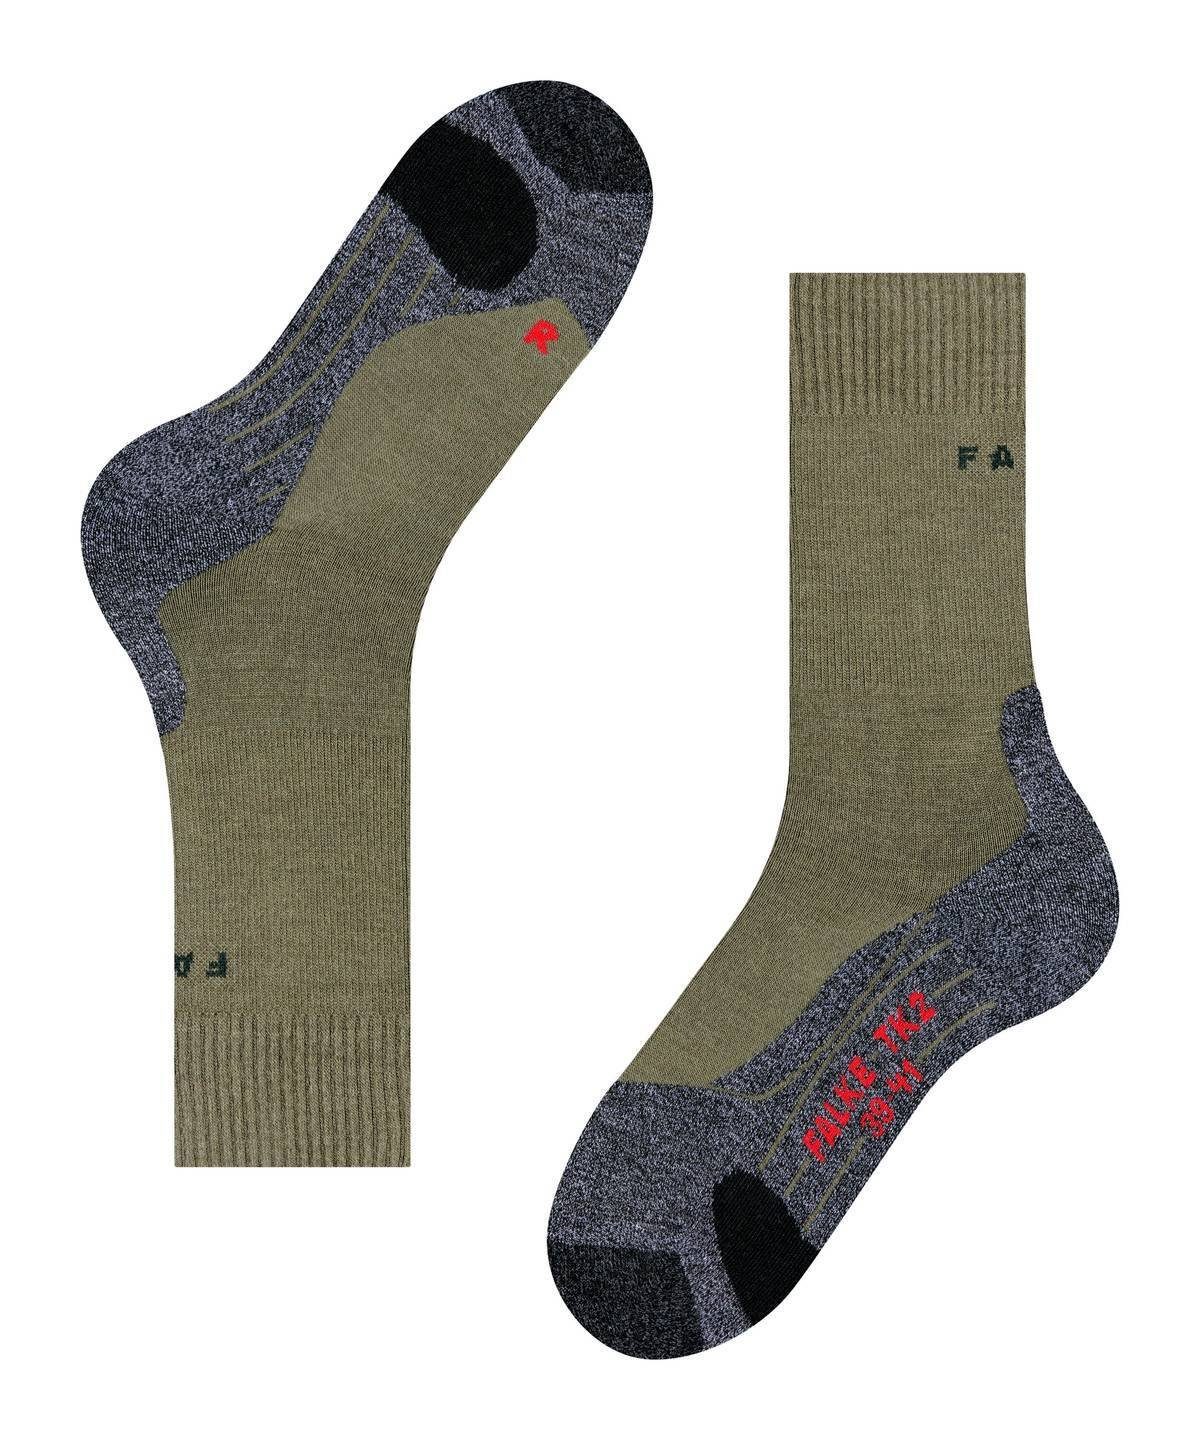 Herren Olivgrün TK2, FALKE Trekking Sportsocken Polsterung Socken - Socken